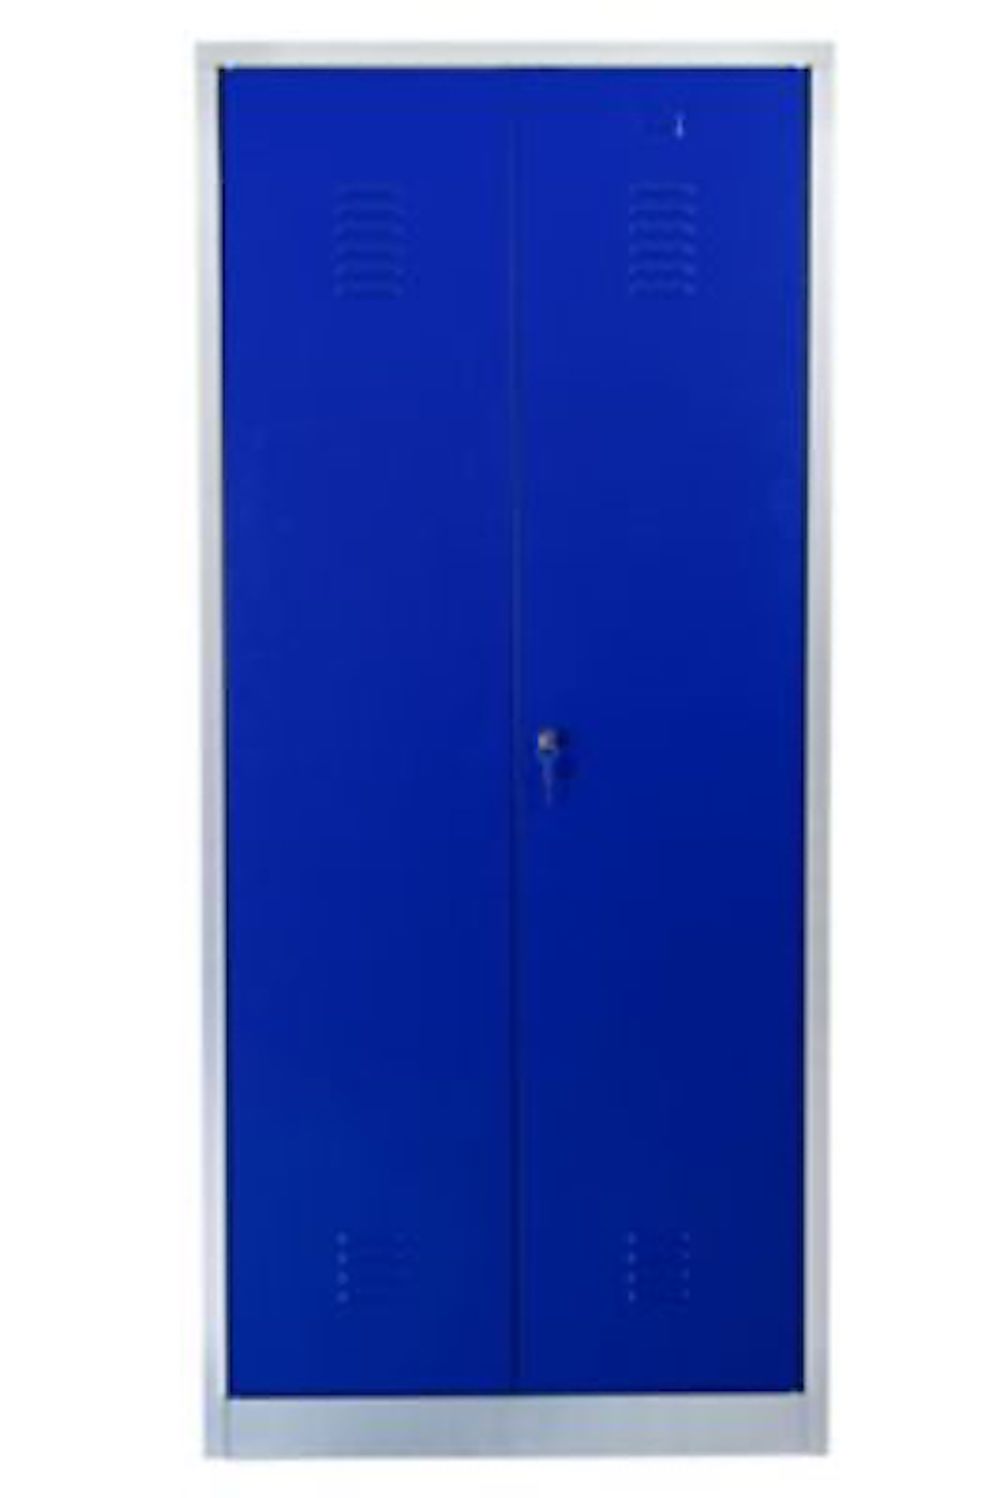 Metallspind Flamingo | HxBxT 180x80x50 cm | Zylindereschloss | Grau-Blau